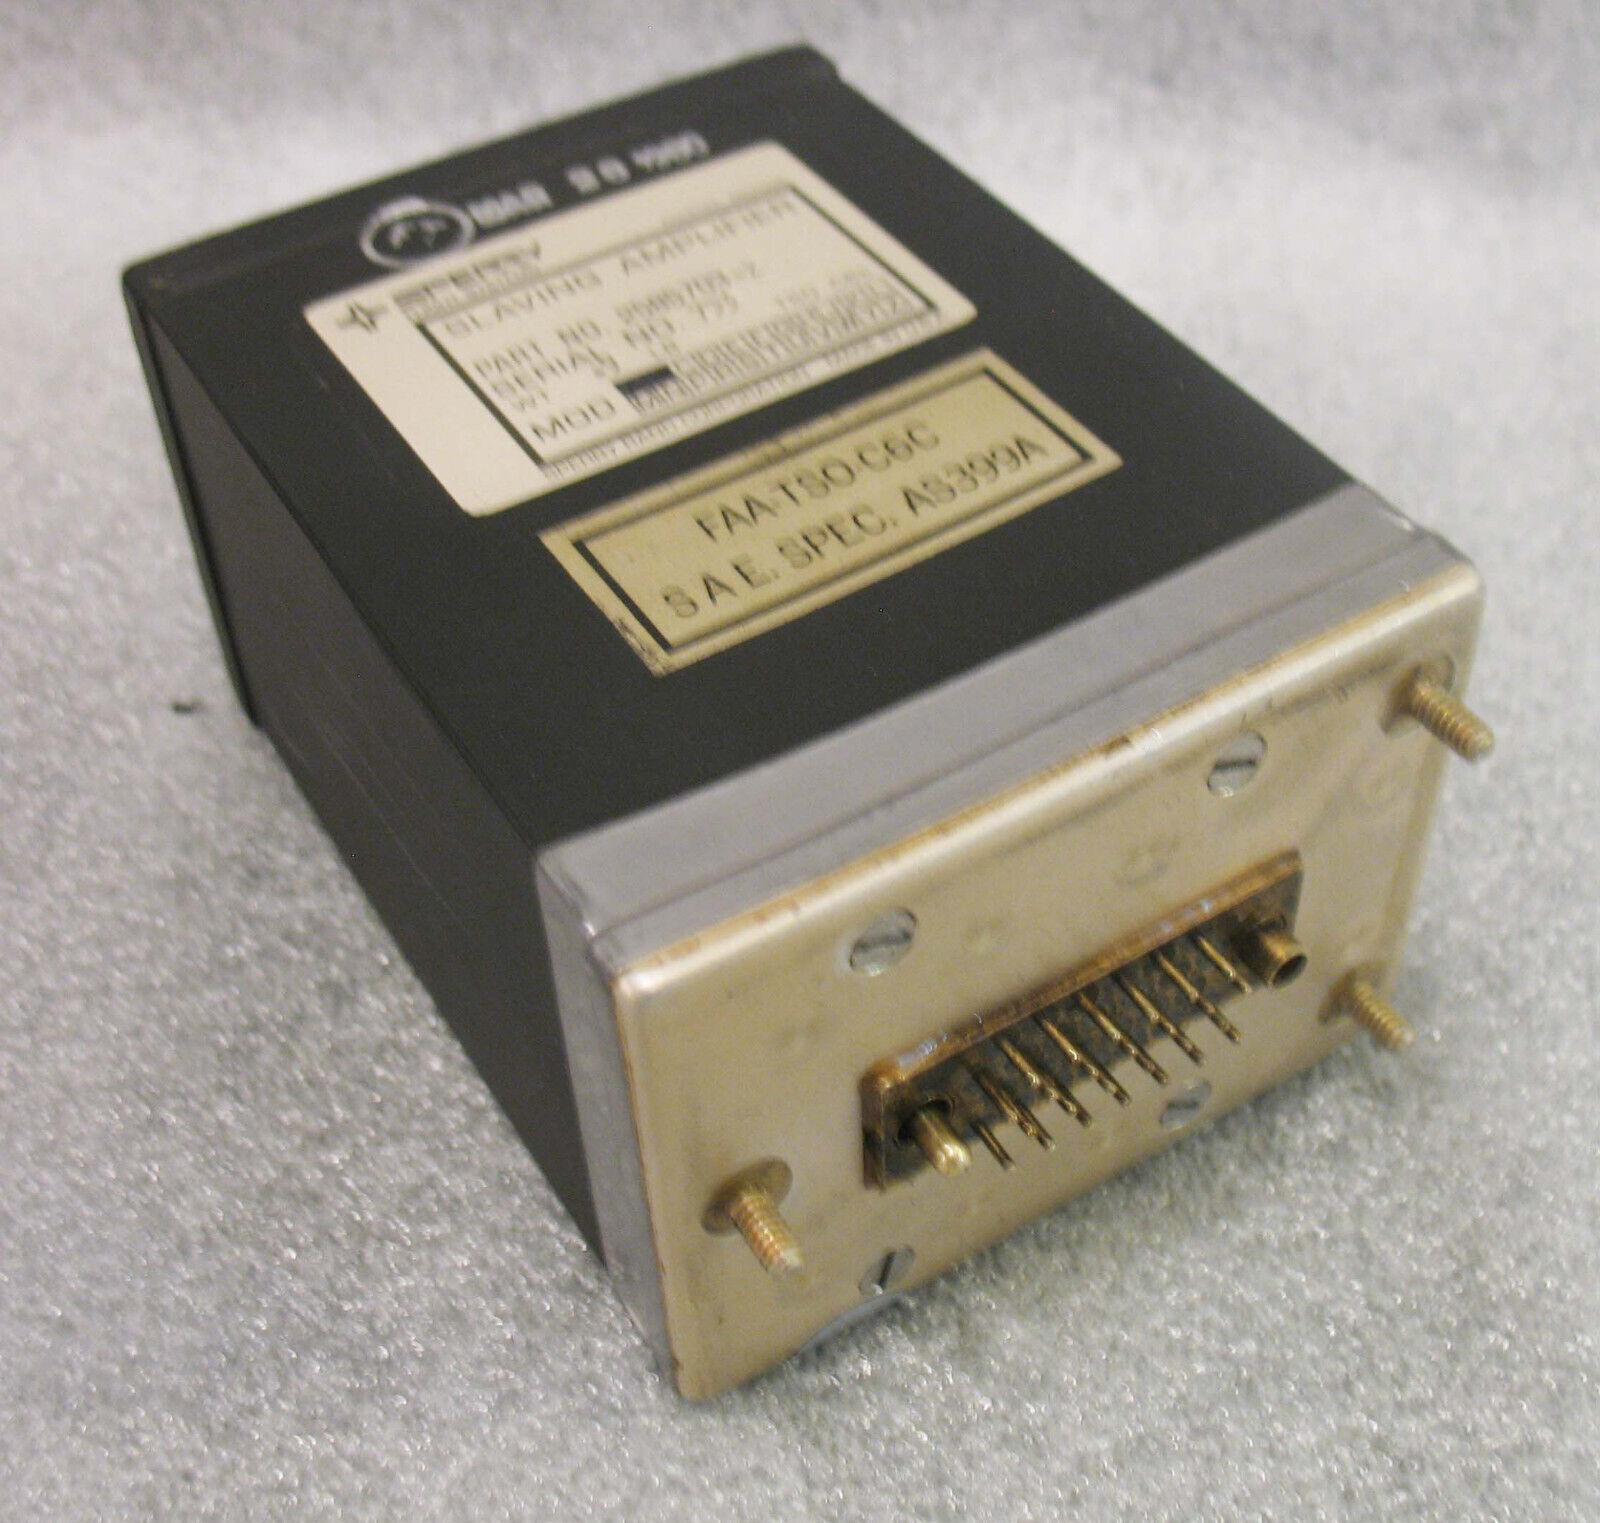 Sperry Amplifier. P/N 2585703-2